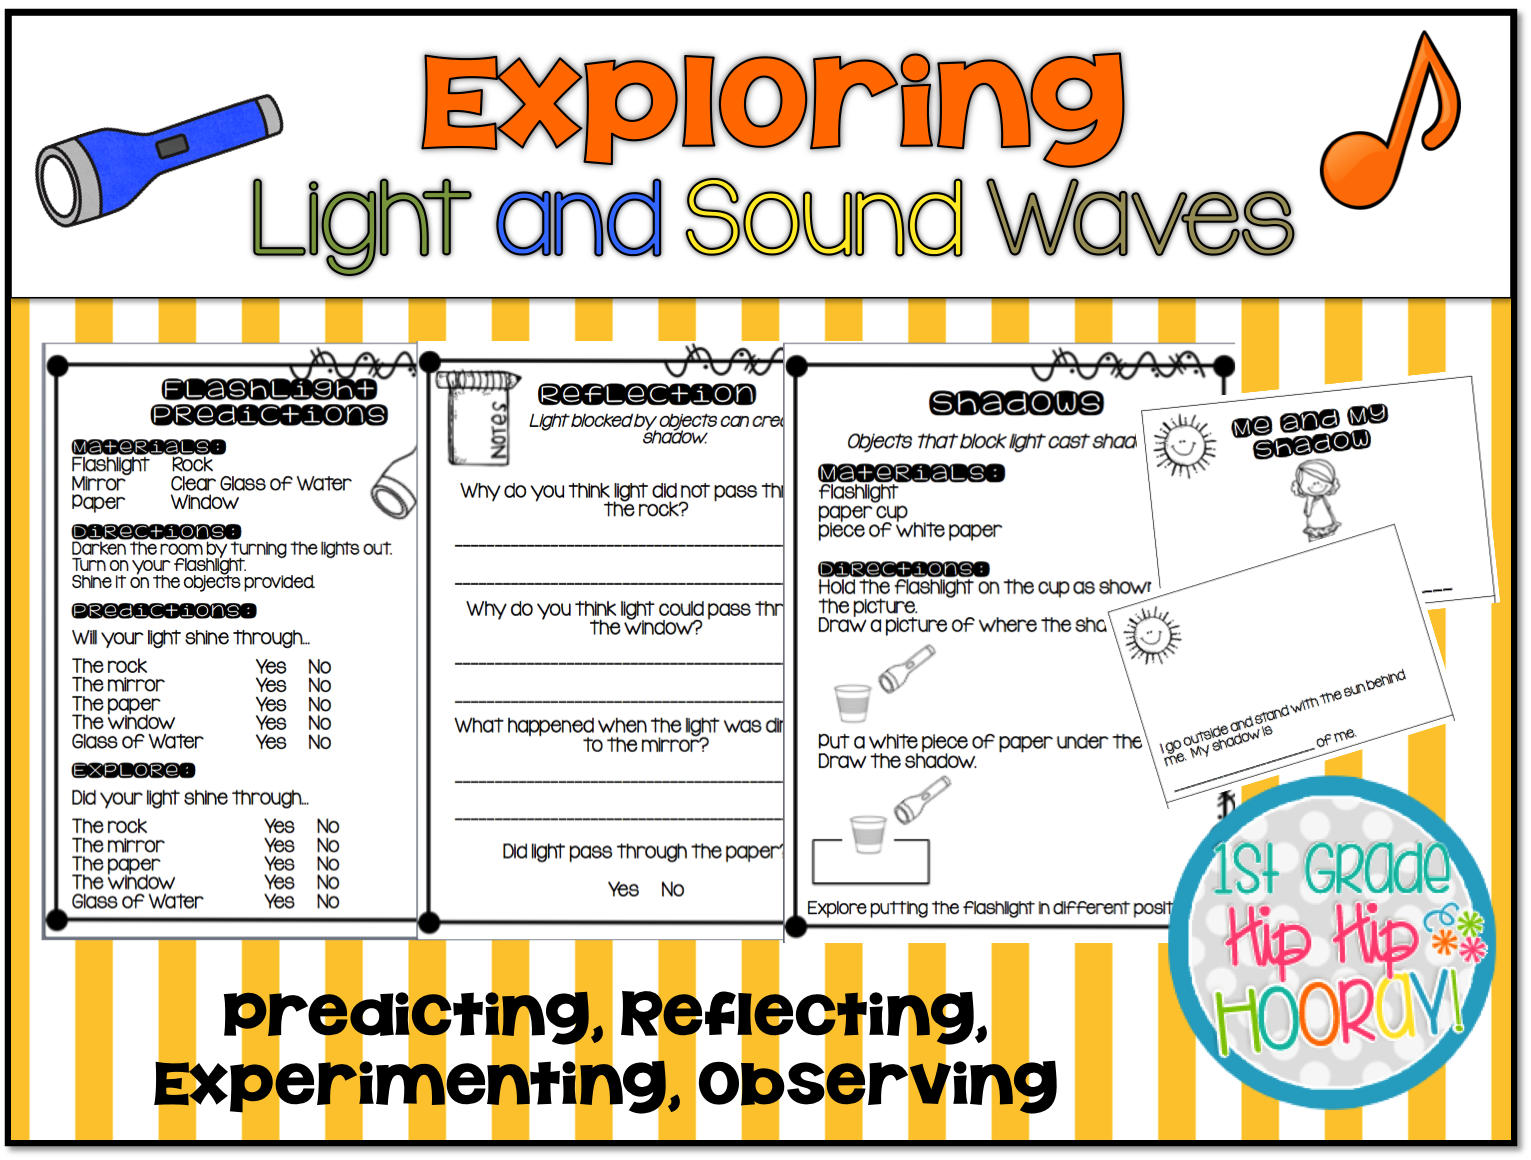 1st Grade Hip Hip Hooray!: Exploring Light and Sound Waves